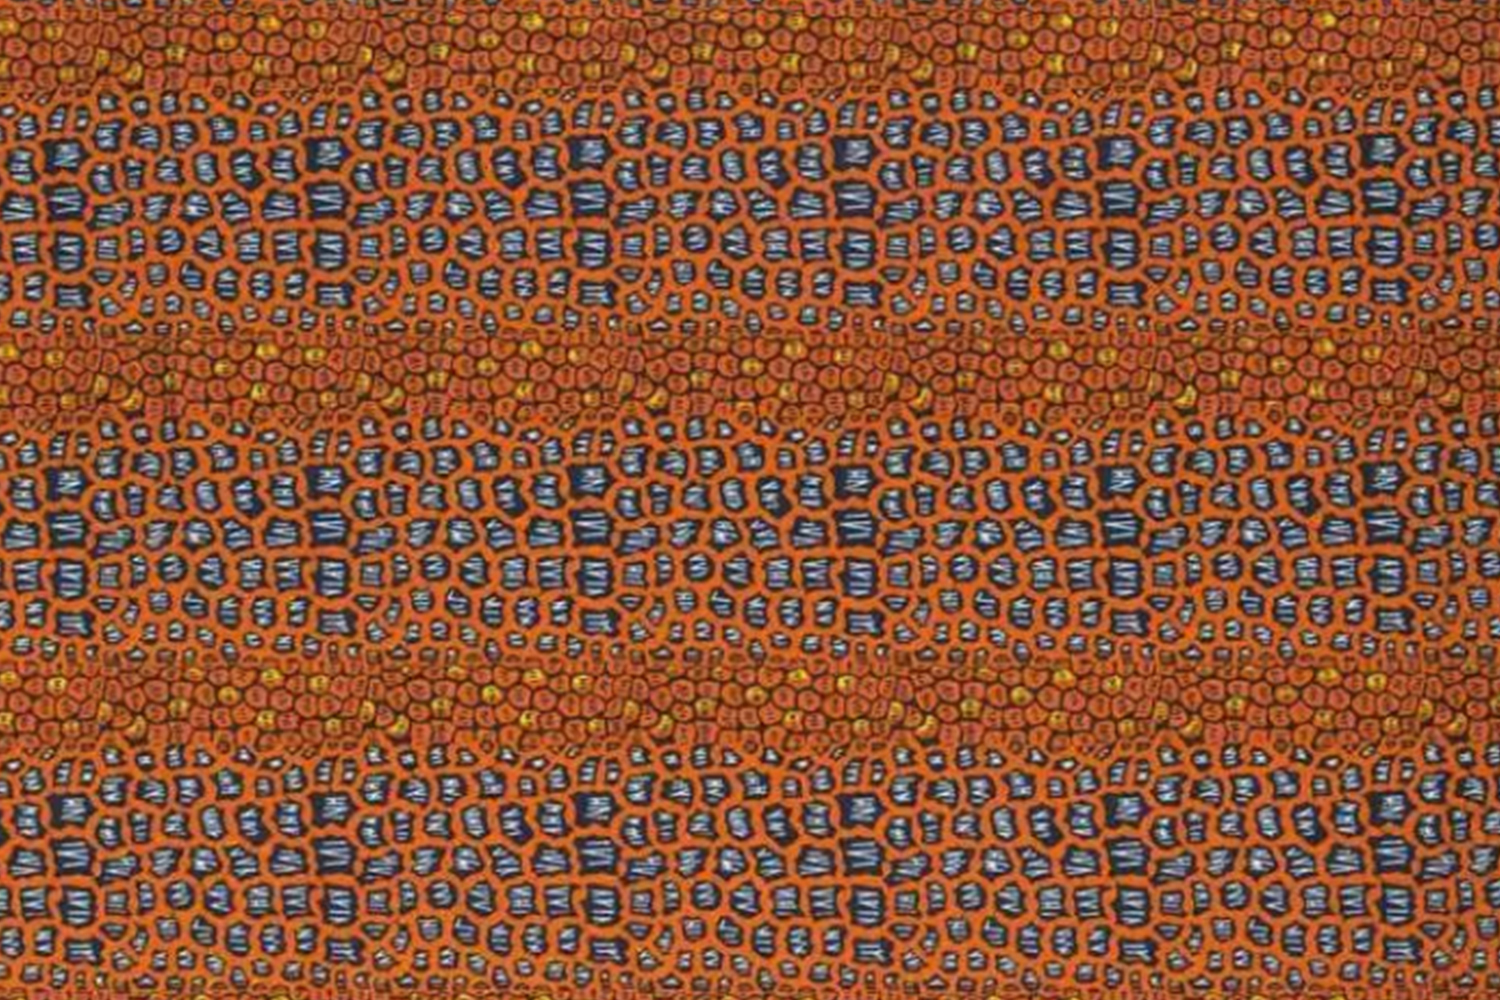 African Wax Print